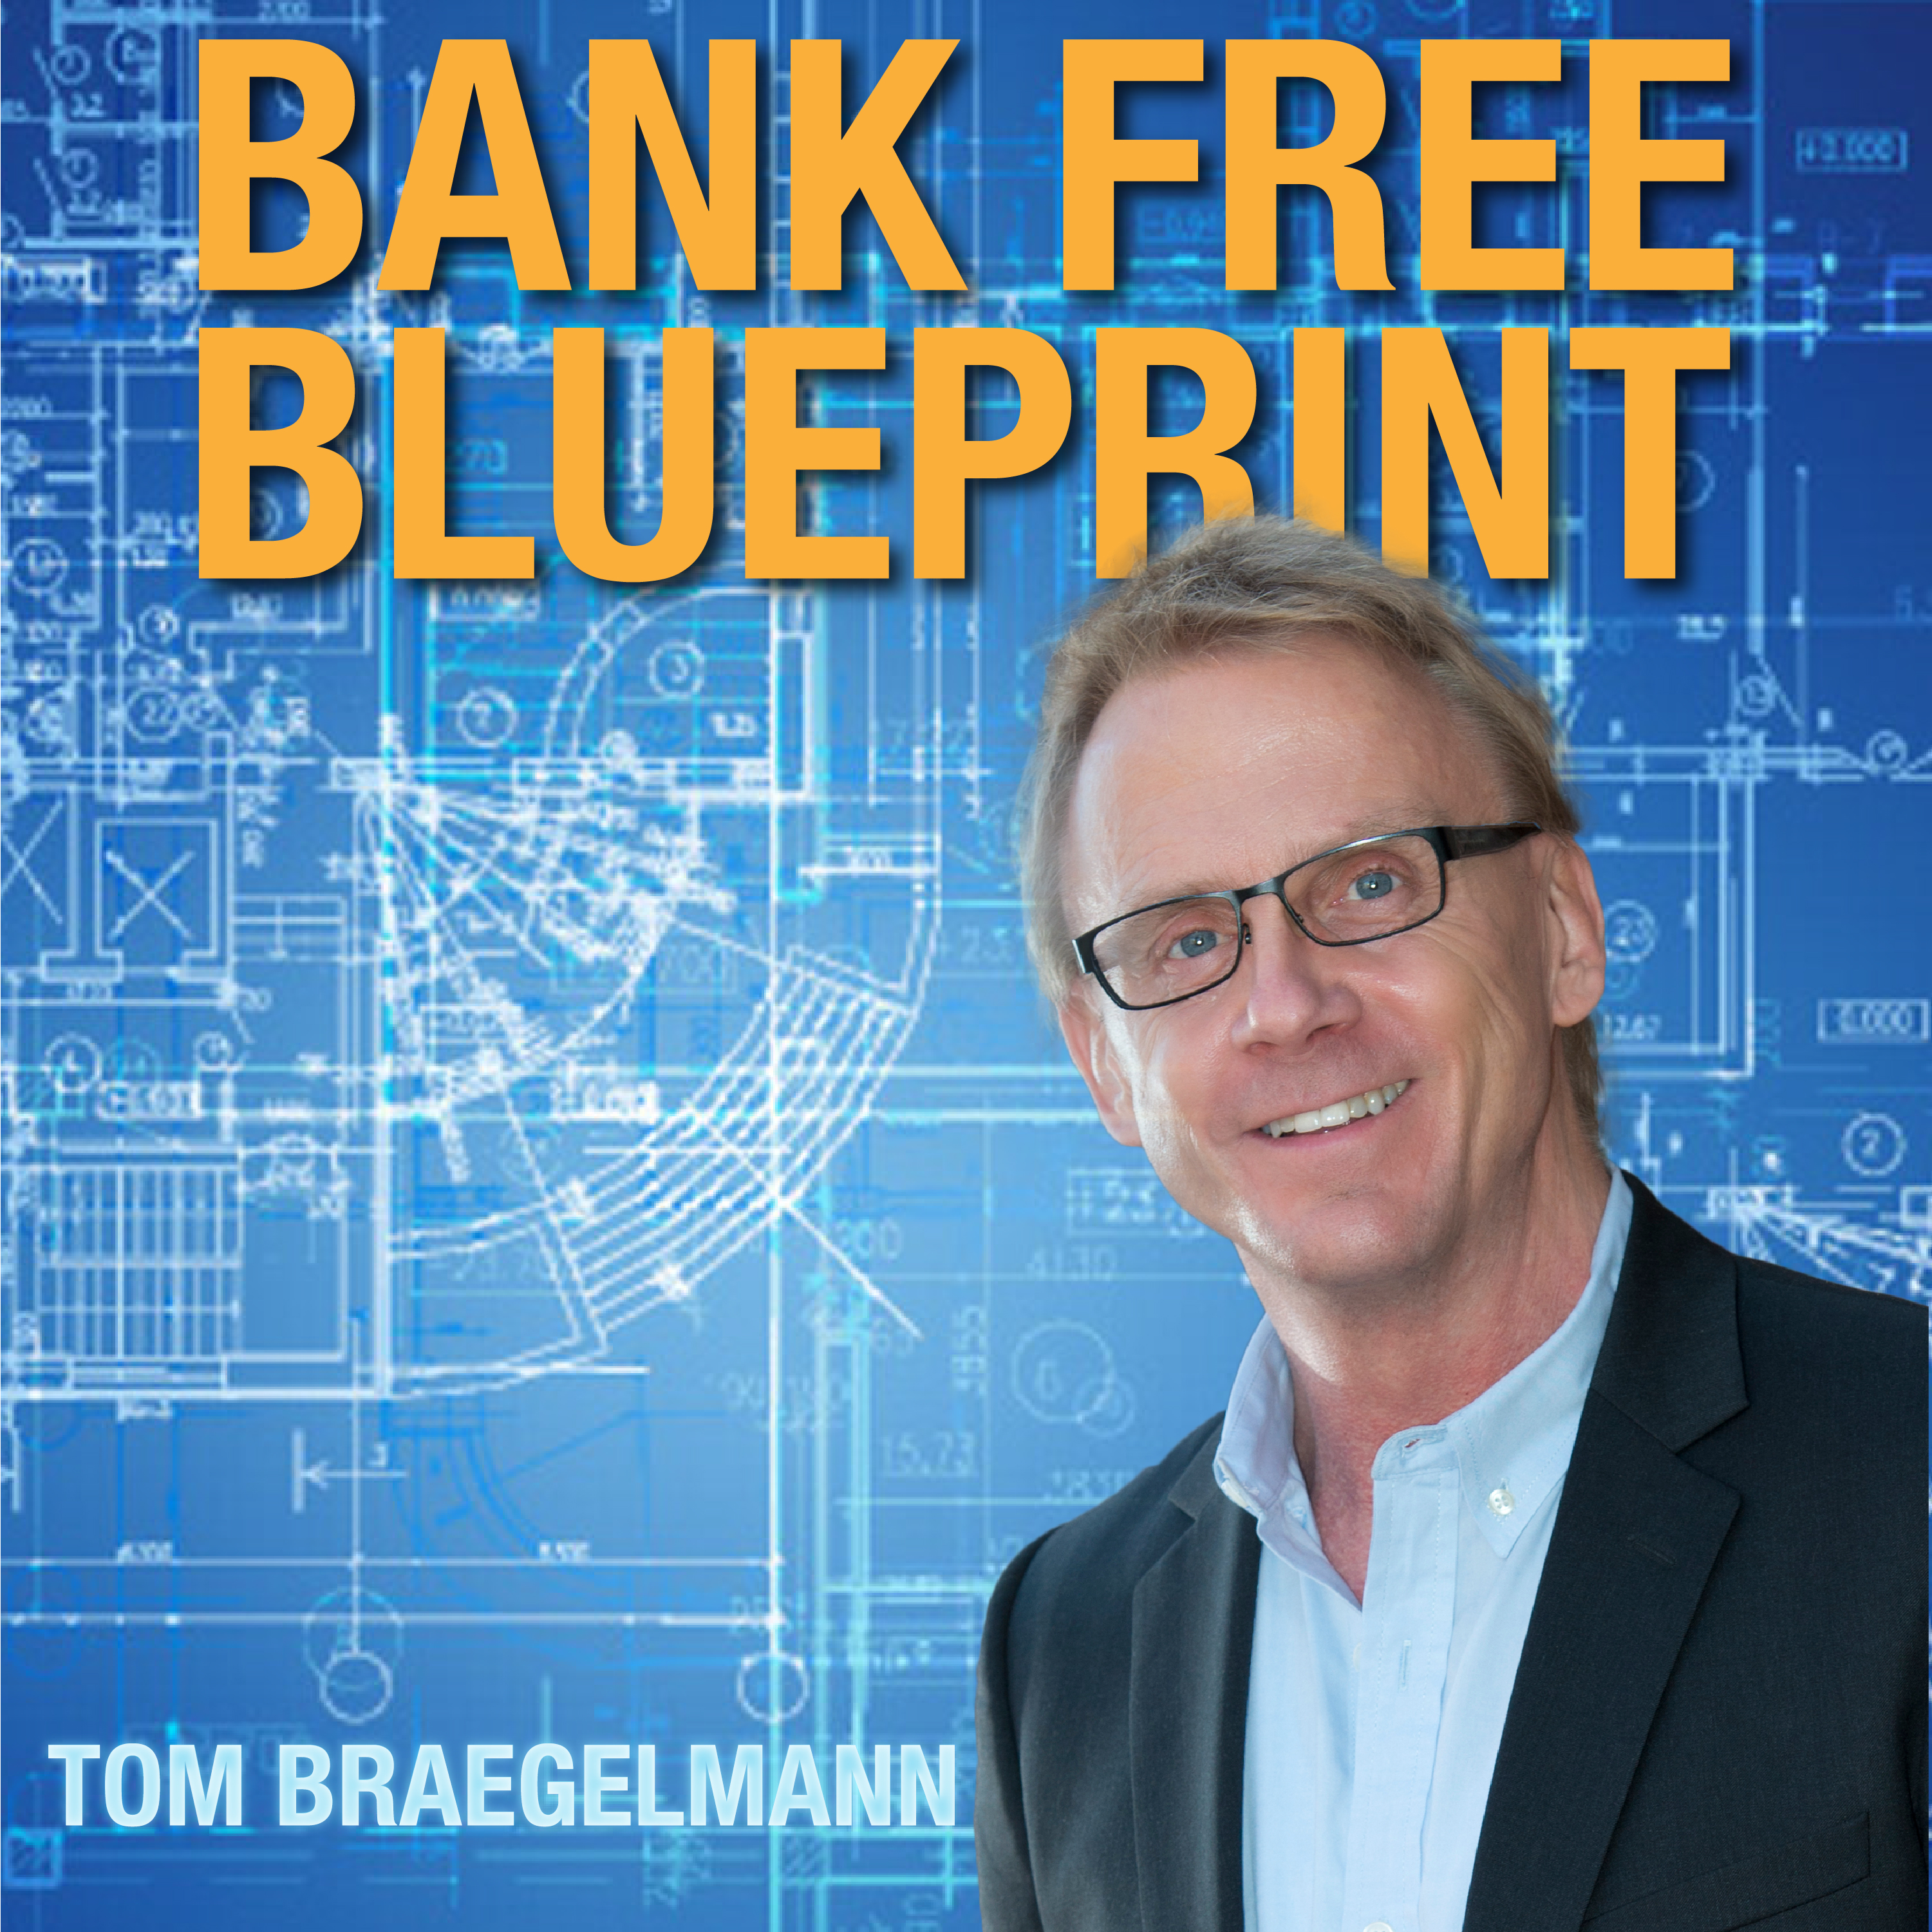 Bank Free Blueprint Introduction